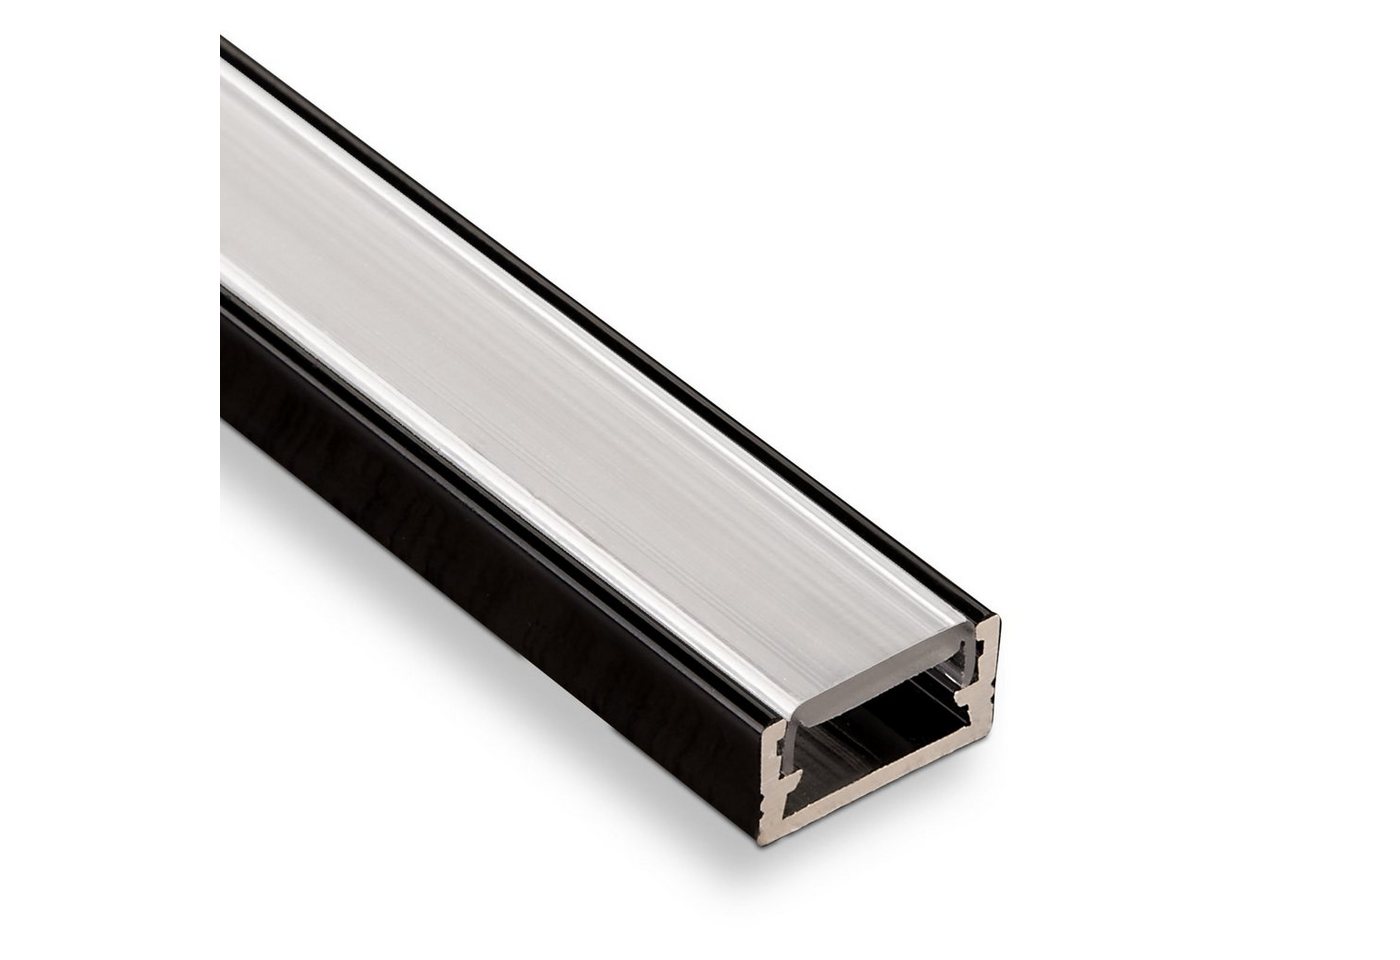 SO-TECH® LED-Stripe-Profil 10 Stück LED-Aluprofil 11, 22 oder 33, Länge je 2 m, Abdeckung opal oder klar, versch. Ausführungen von SO-TECH®